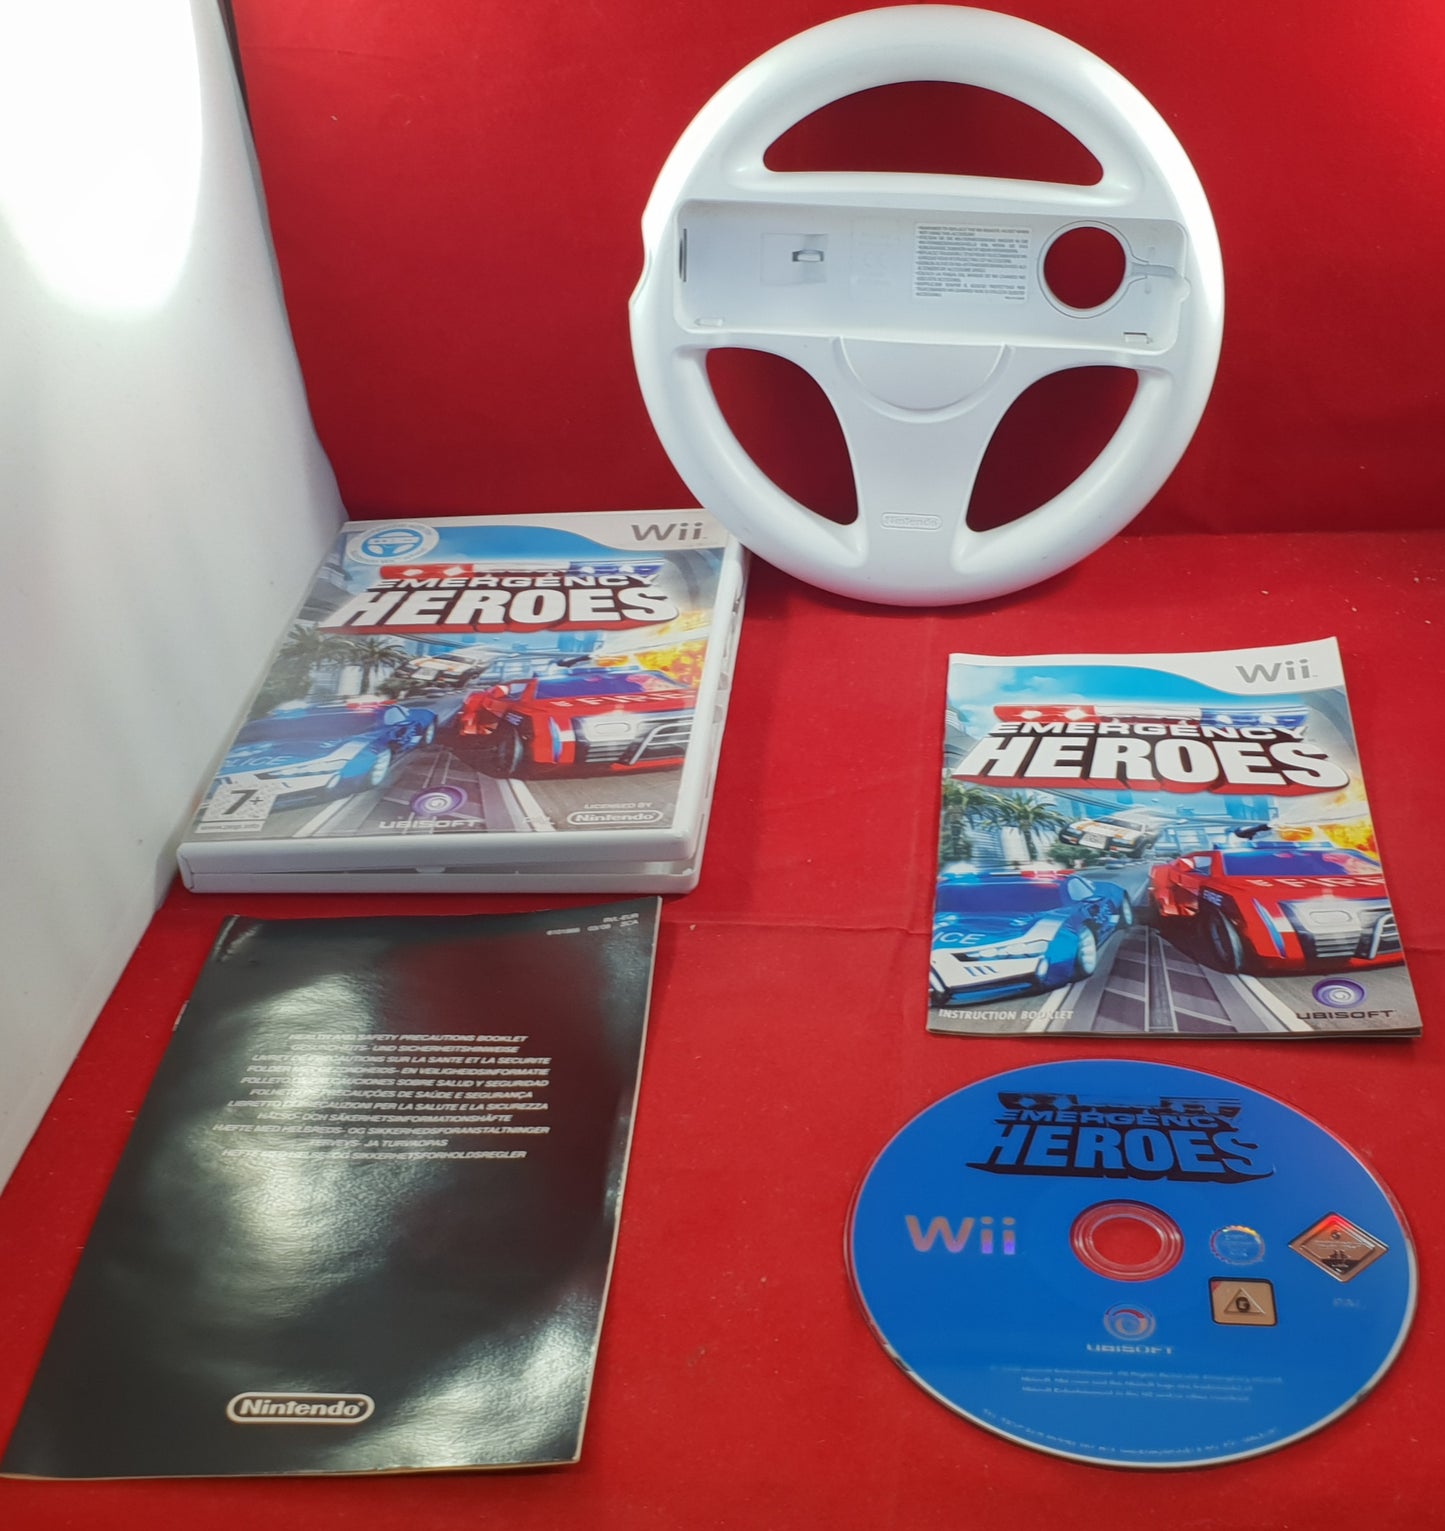 Emergency Heroes with Official Racing Wheel Nintendo Wii Game